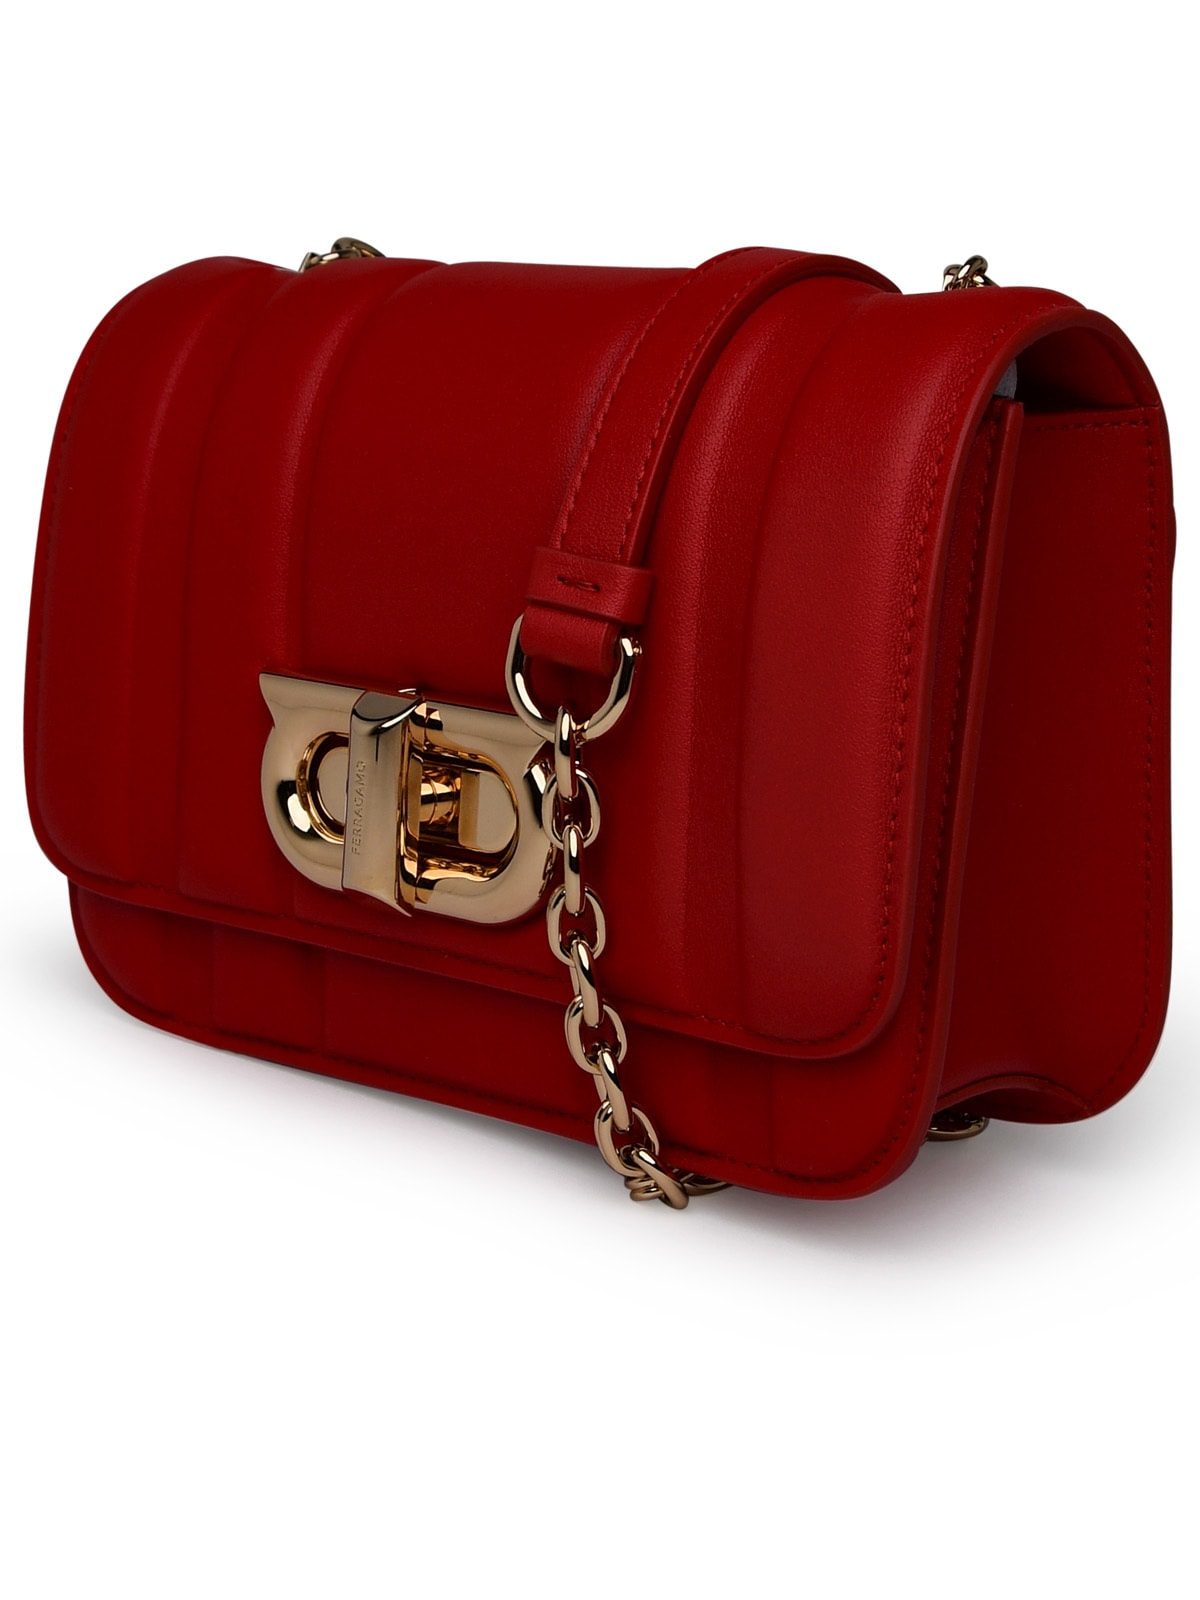 Shop Ferragamo Red Leather Bag